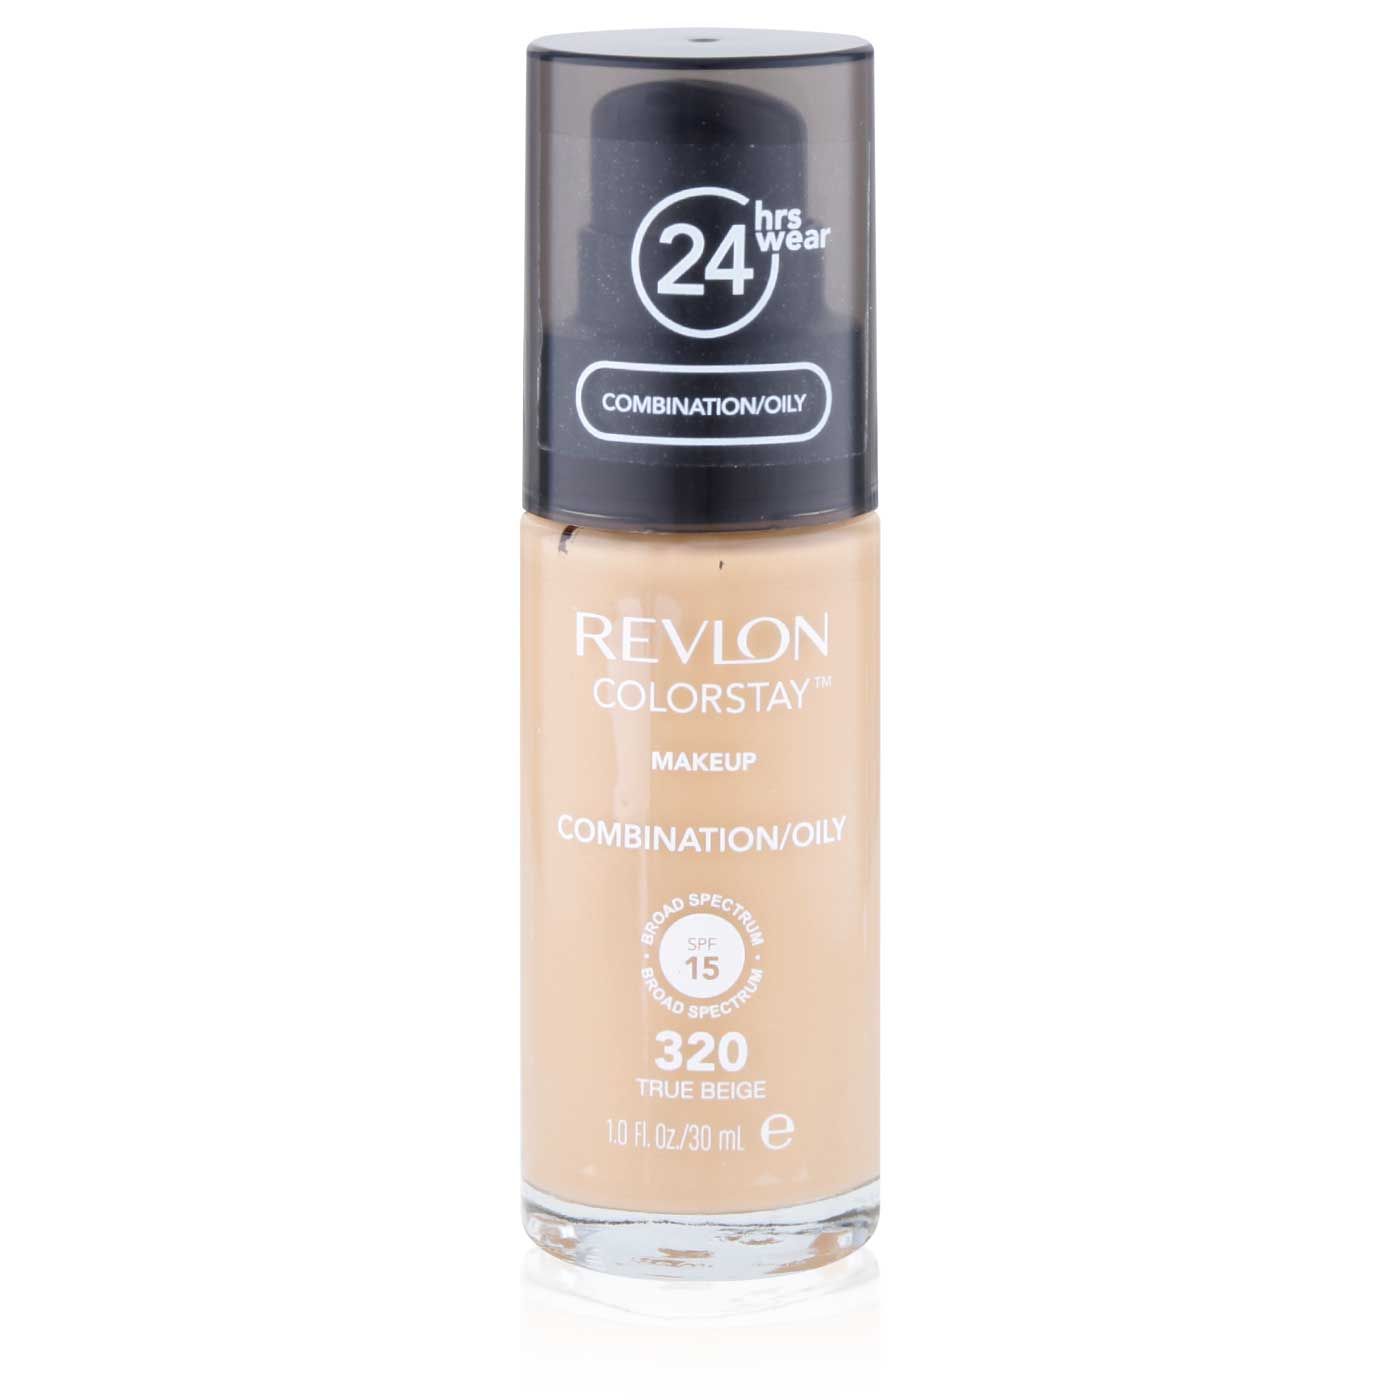 Revlon Colorstay Makeup Combination/Oily True Beige w/ Pump - 1